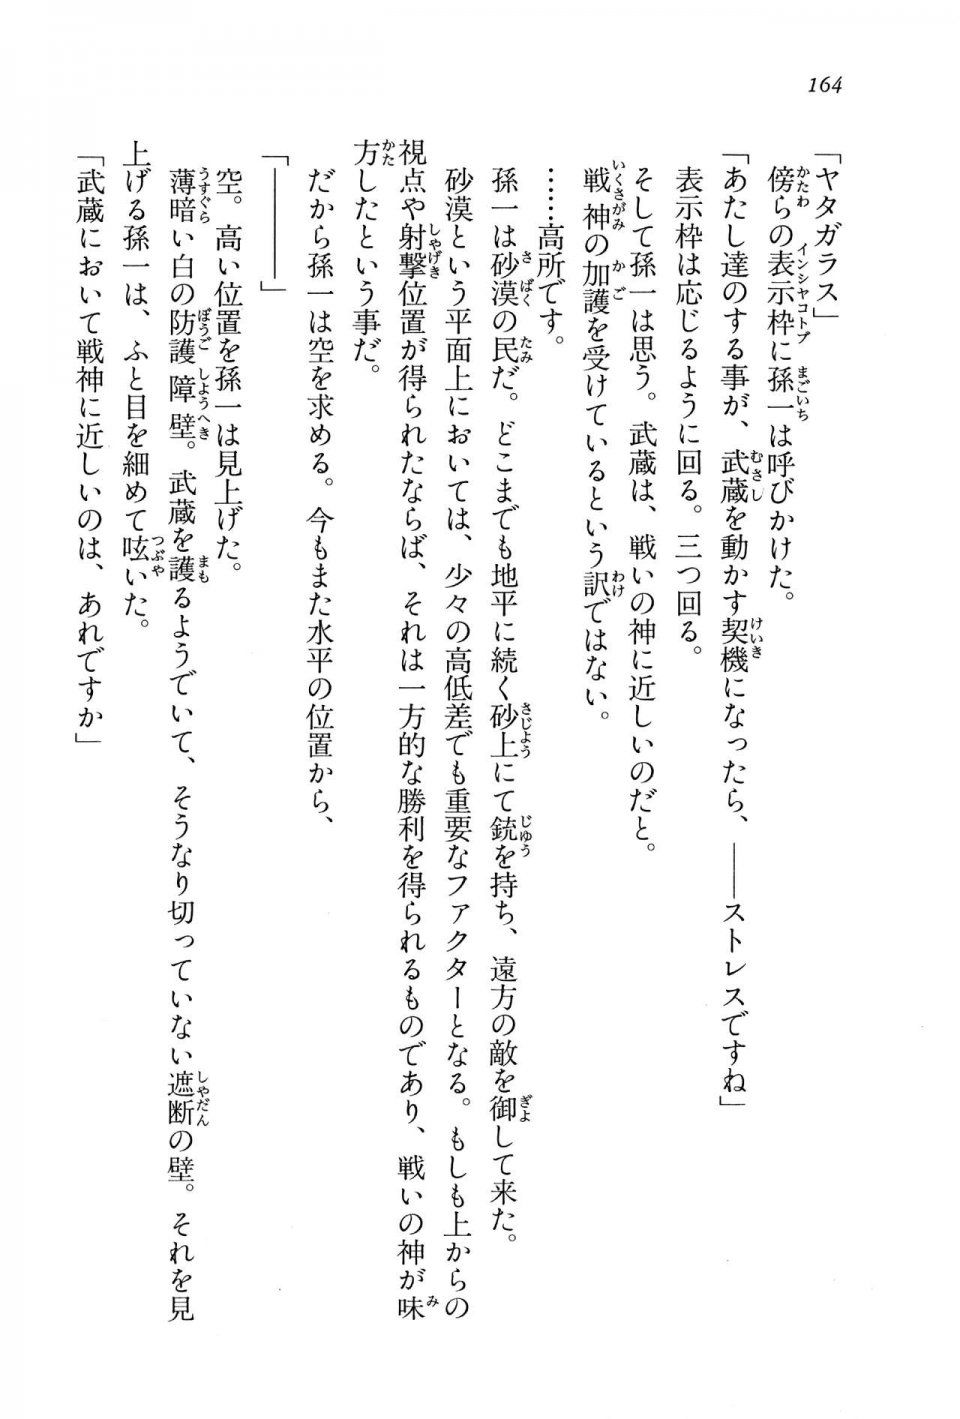 Kyoukai Senjou no Horizon BD Special Mininovel Vol 7(4A) - Photo #168